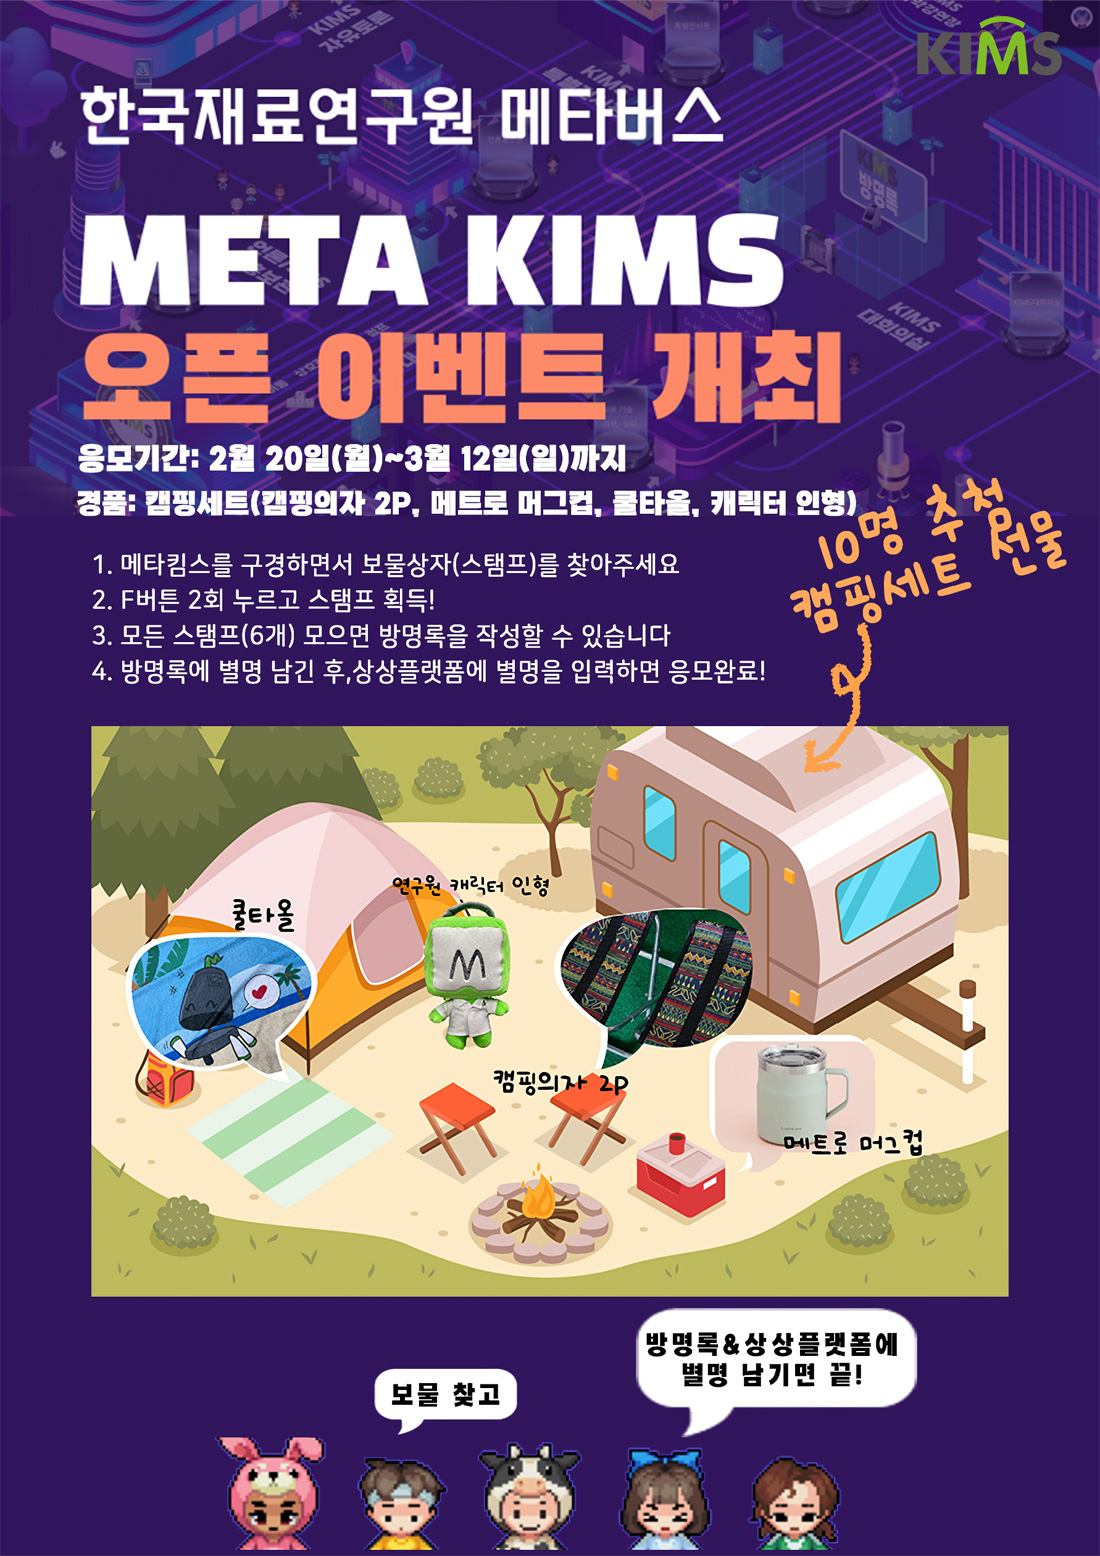 META KIMS 오픈 이벤트 개최